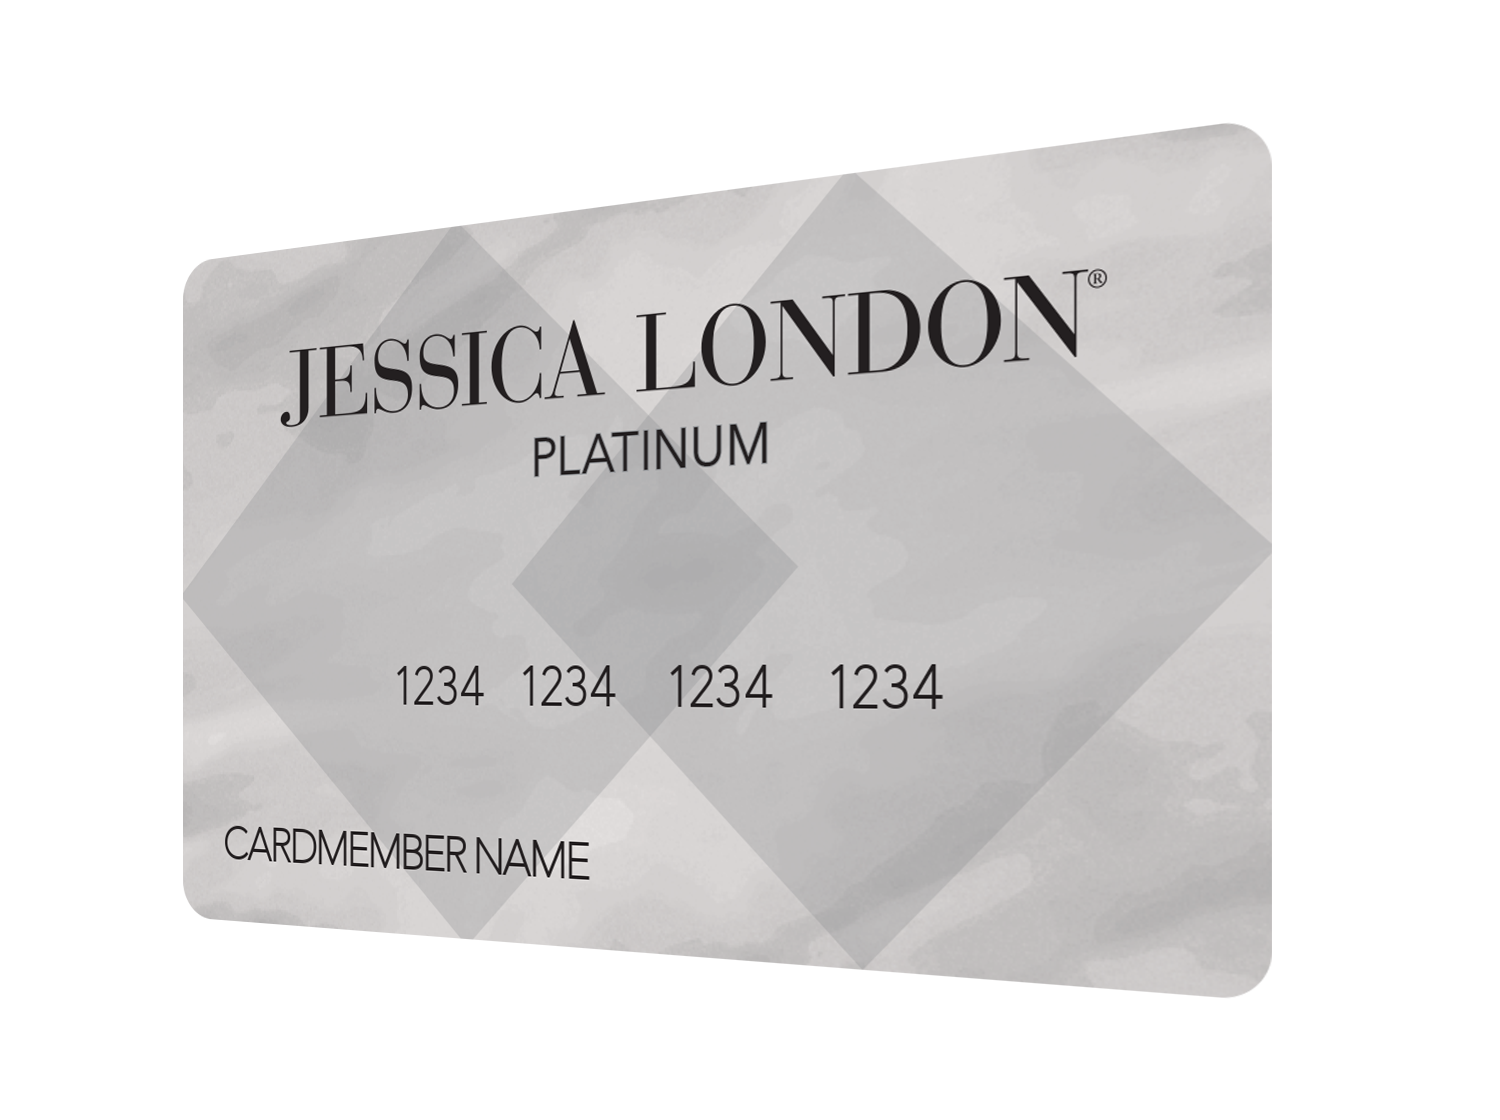 Jessica London Platinum Credit Card